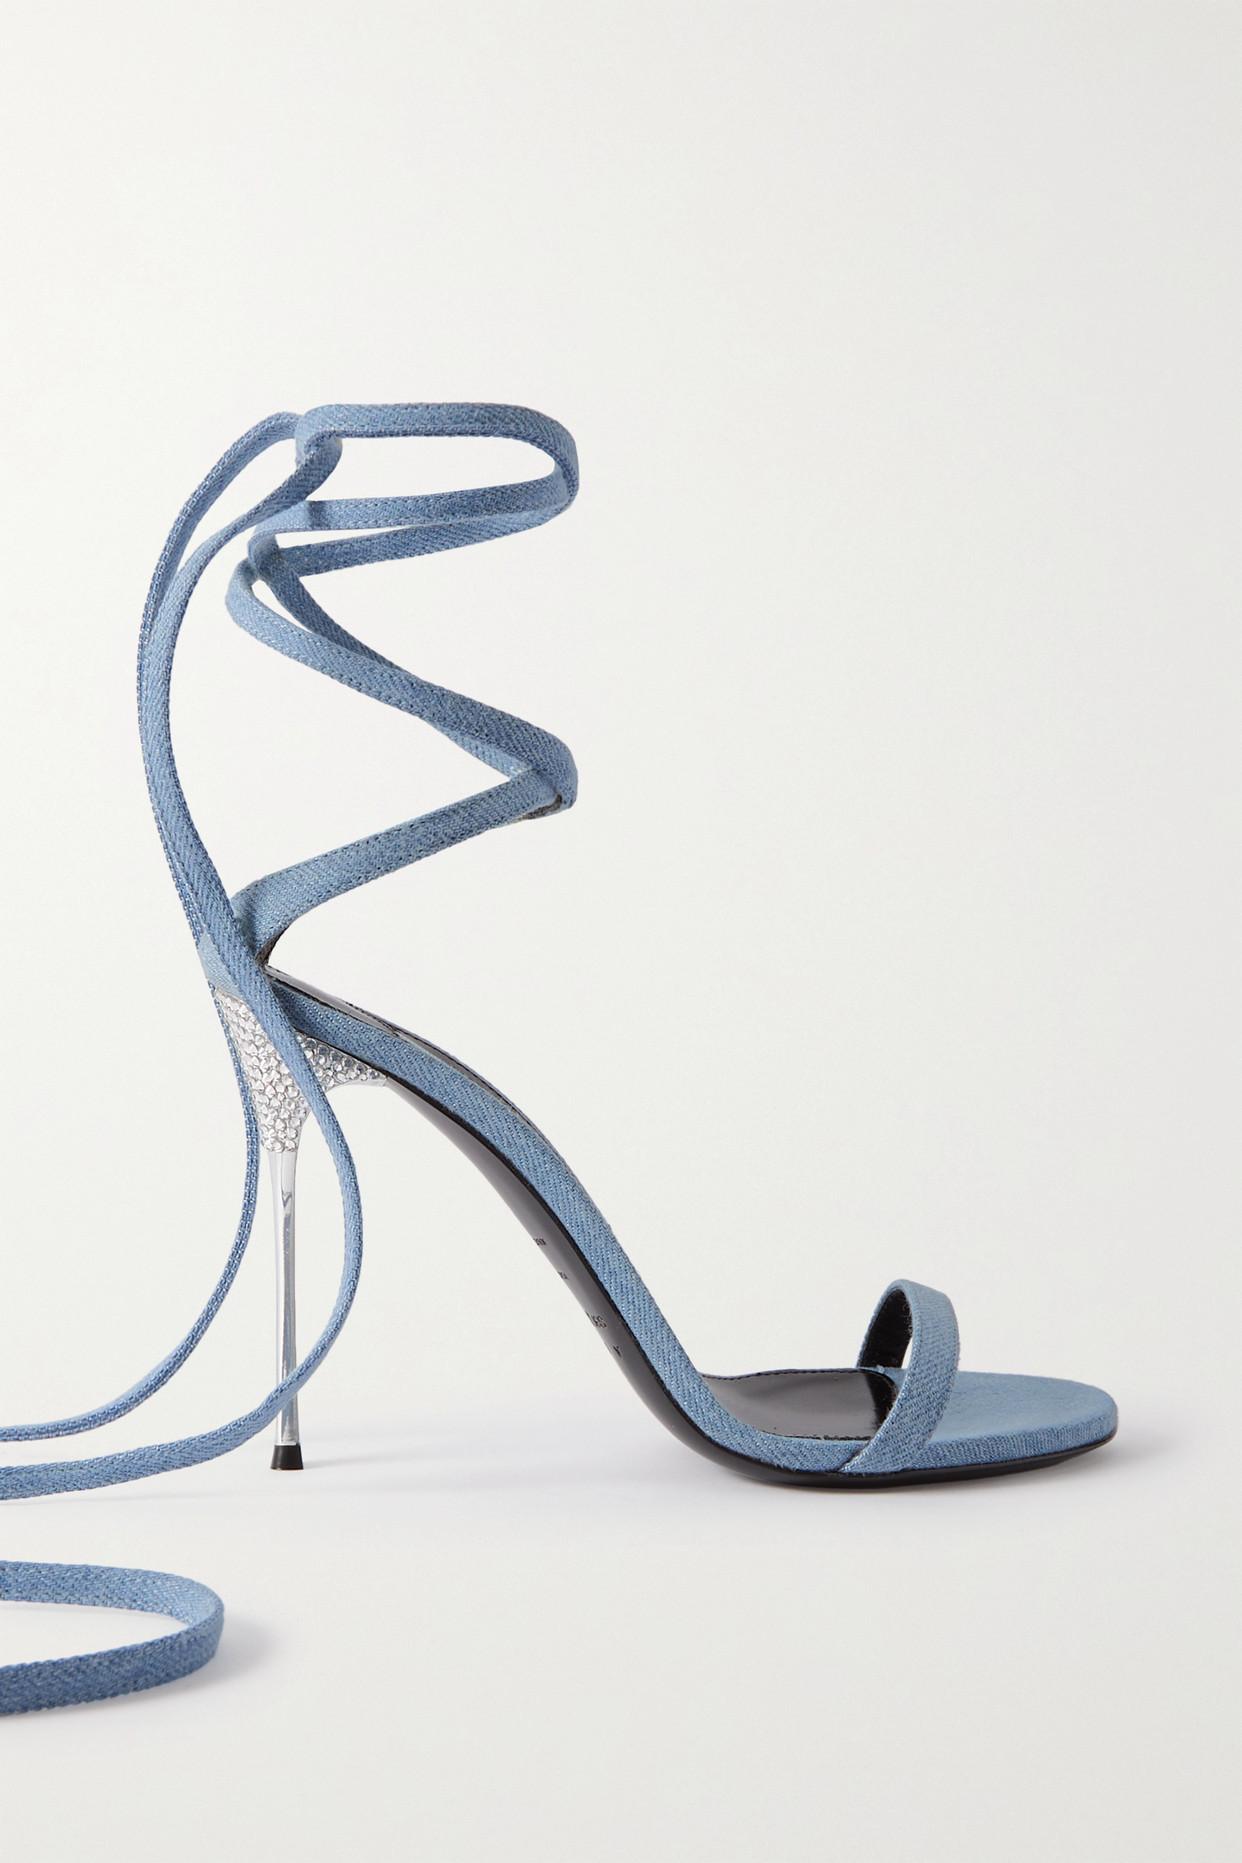 Sergio Rossi + Area Shibari Denim Sandals in Blue | Lyst